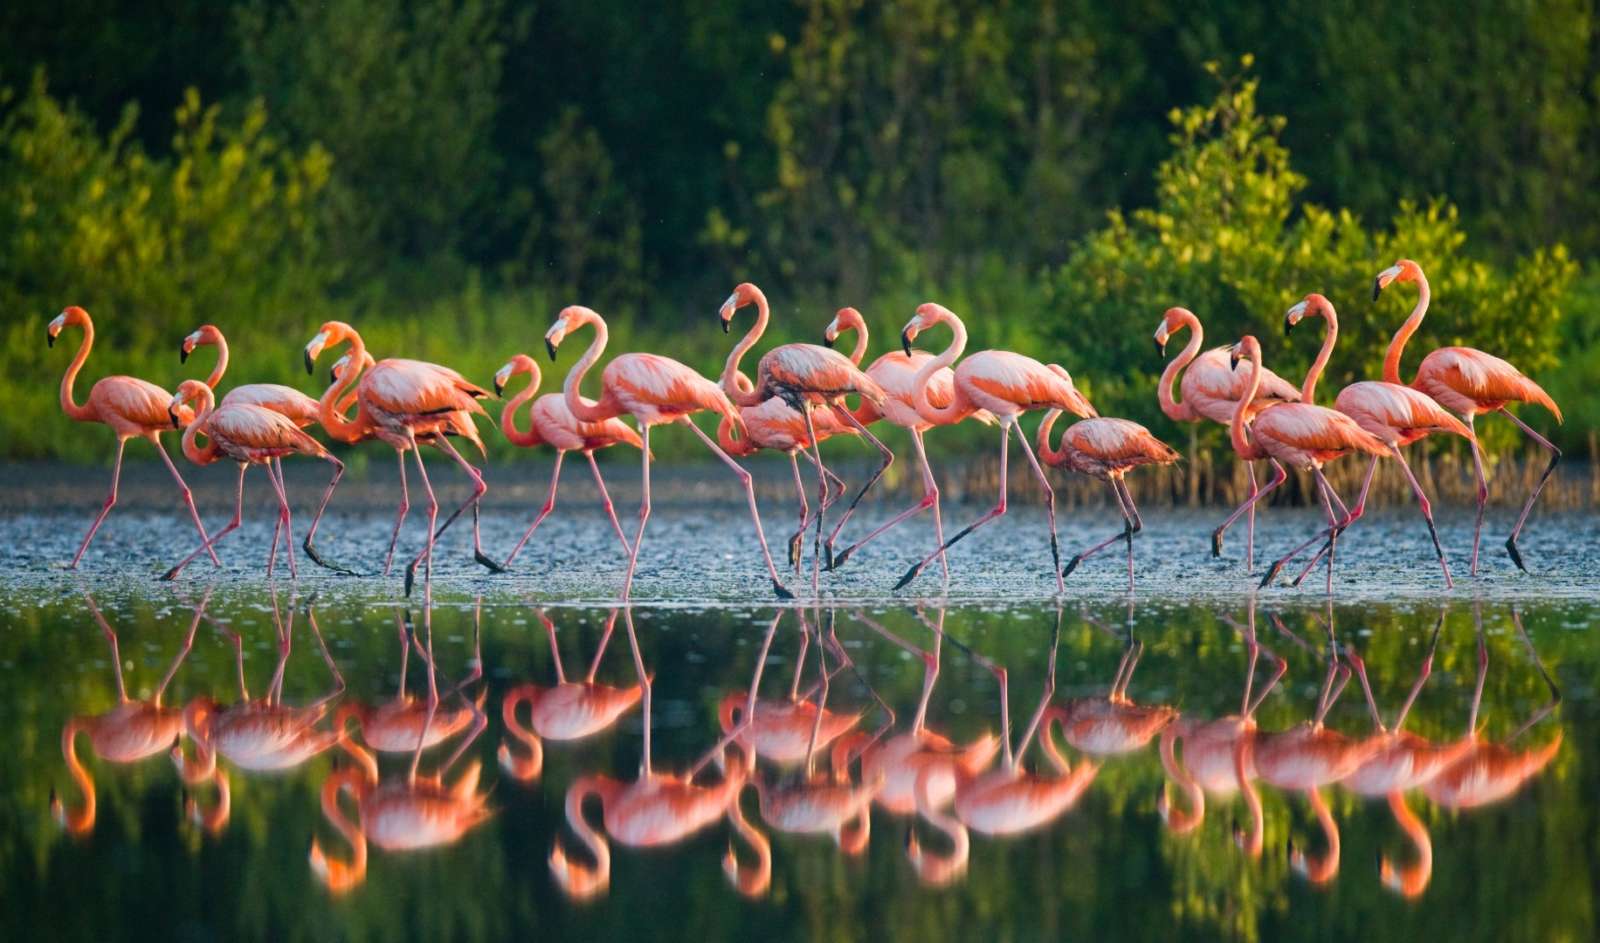 A flock of flamingos in Cuba